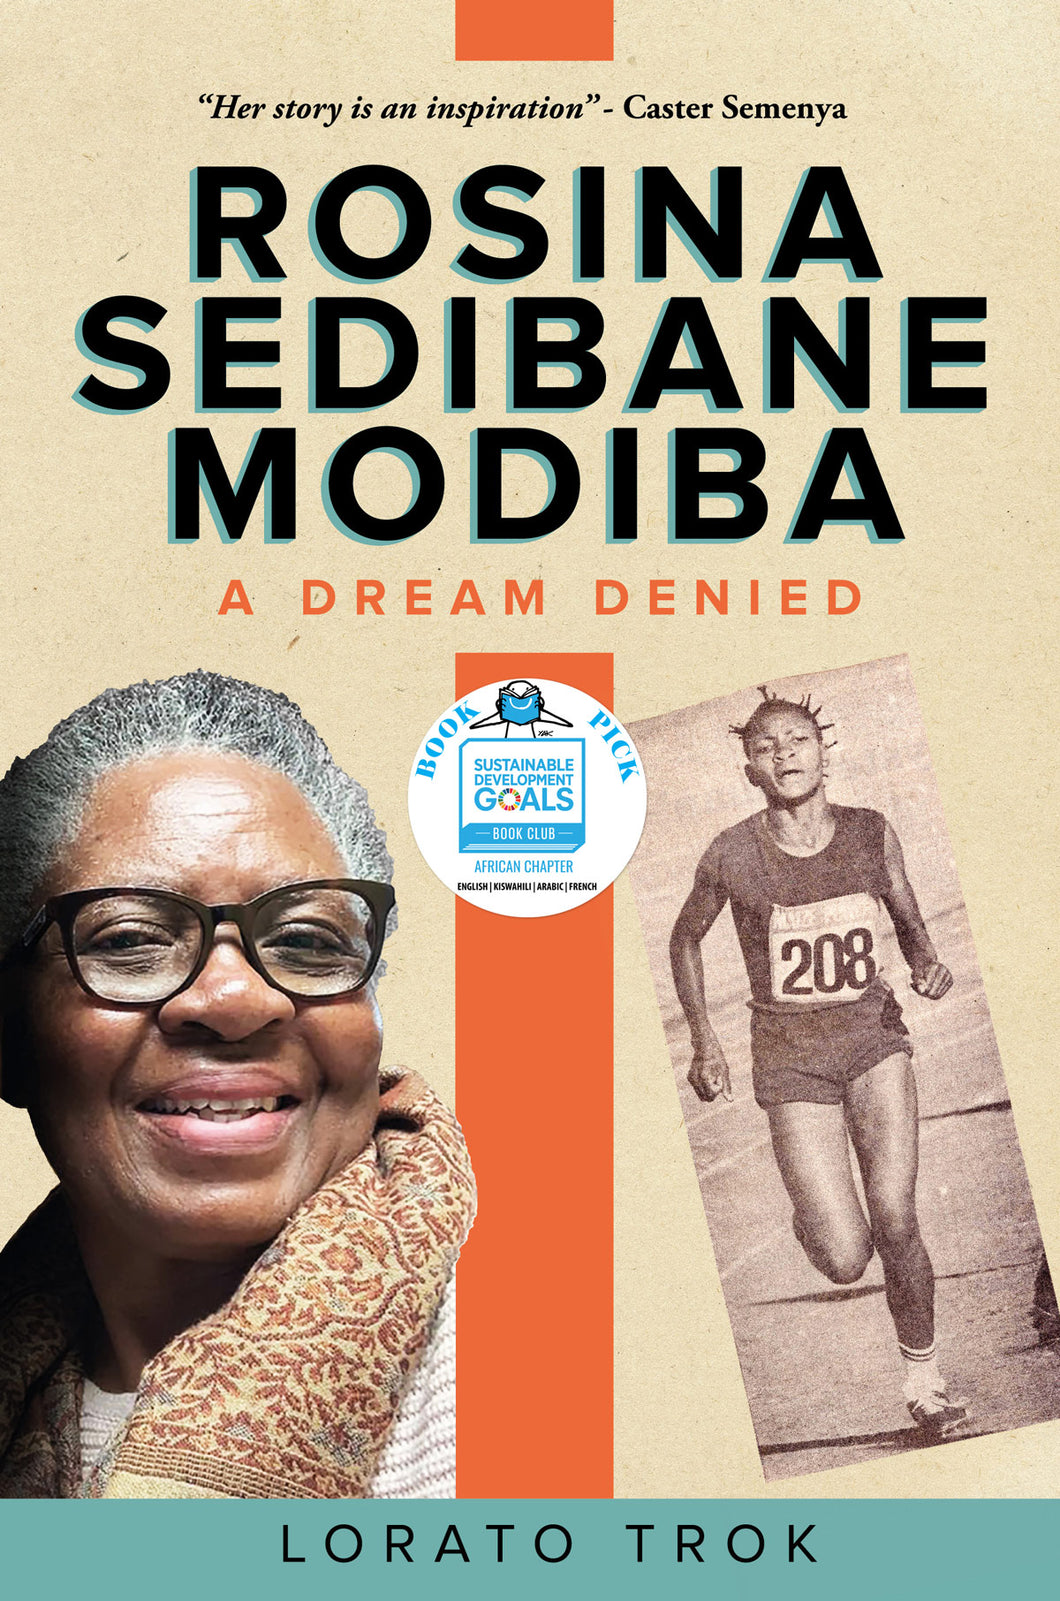 ROSINA SEDIBANE MODIBA: A Dream Denied